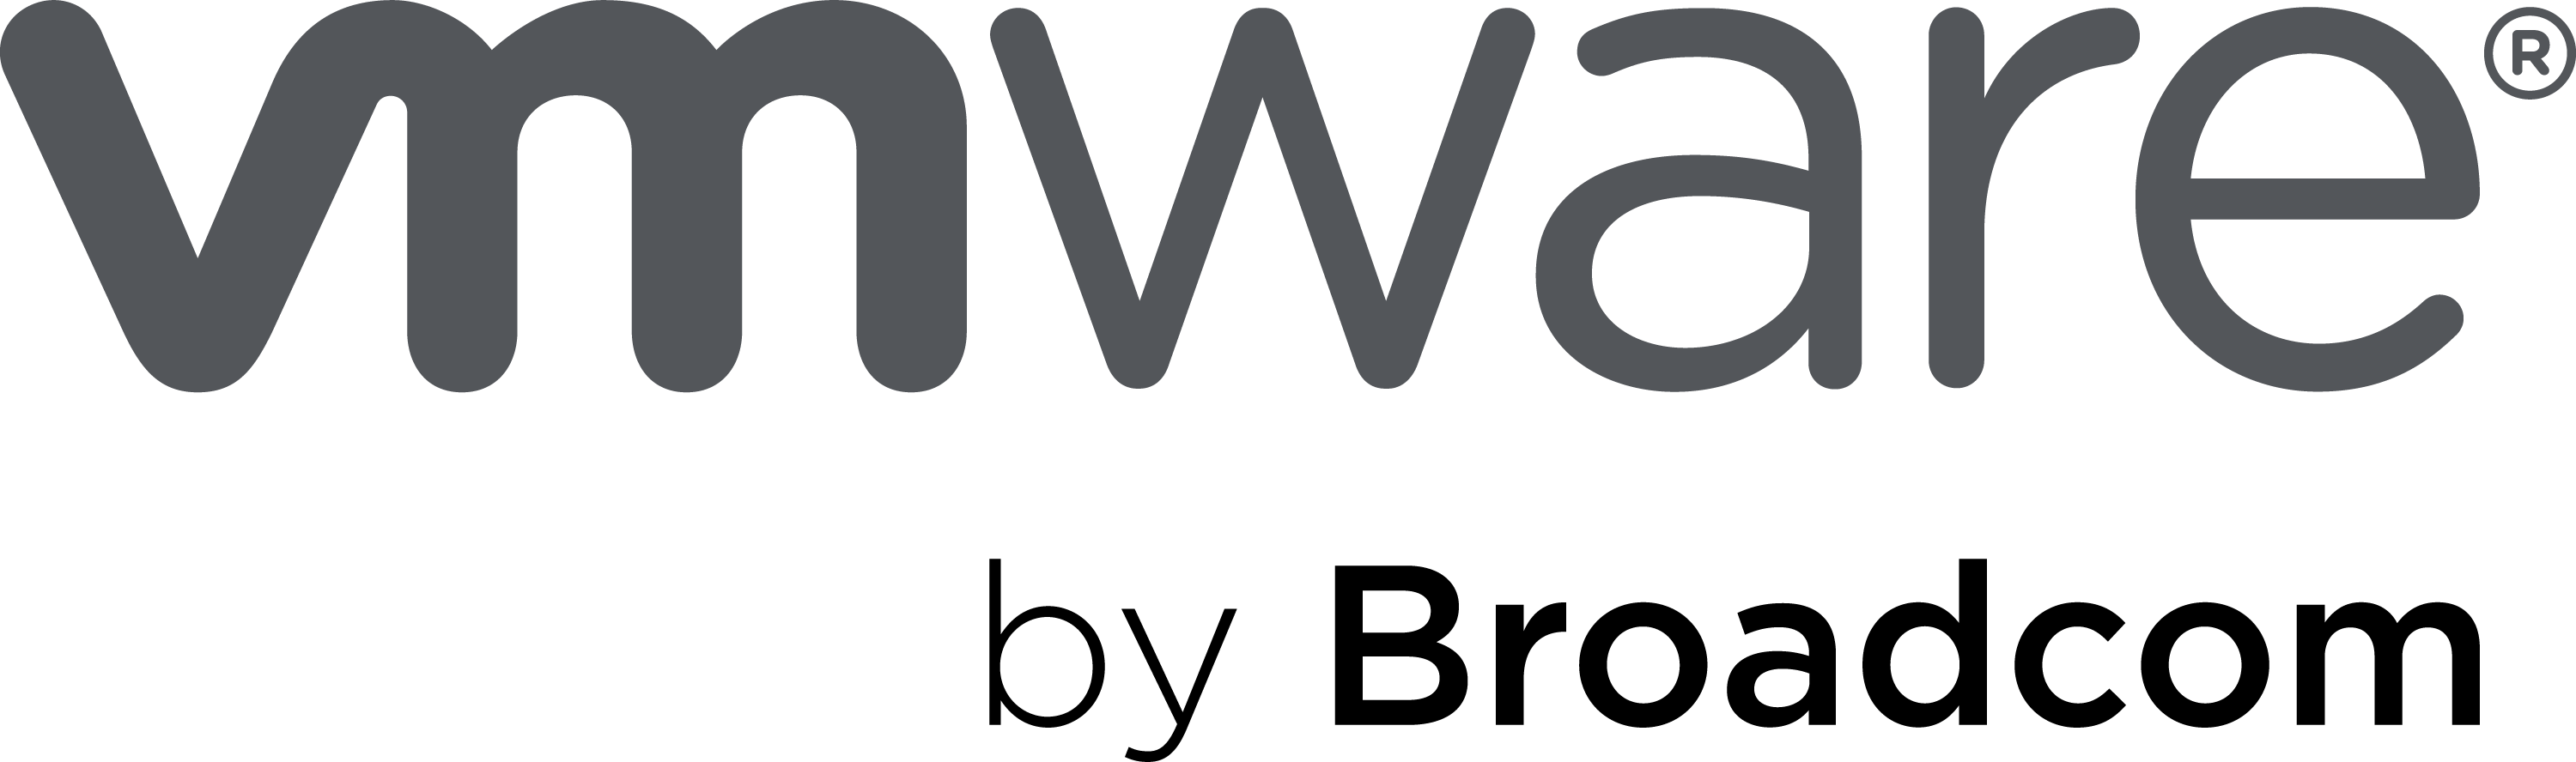 vmware by broadcom logo